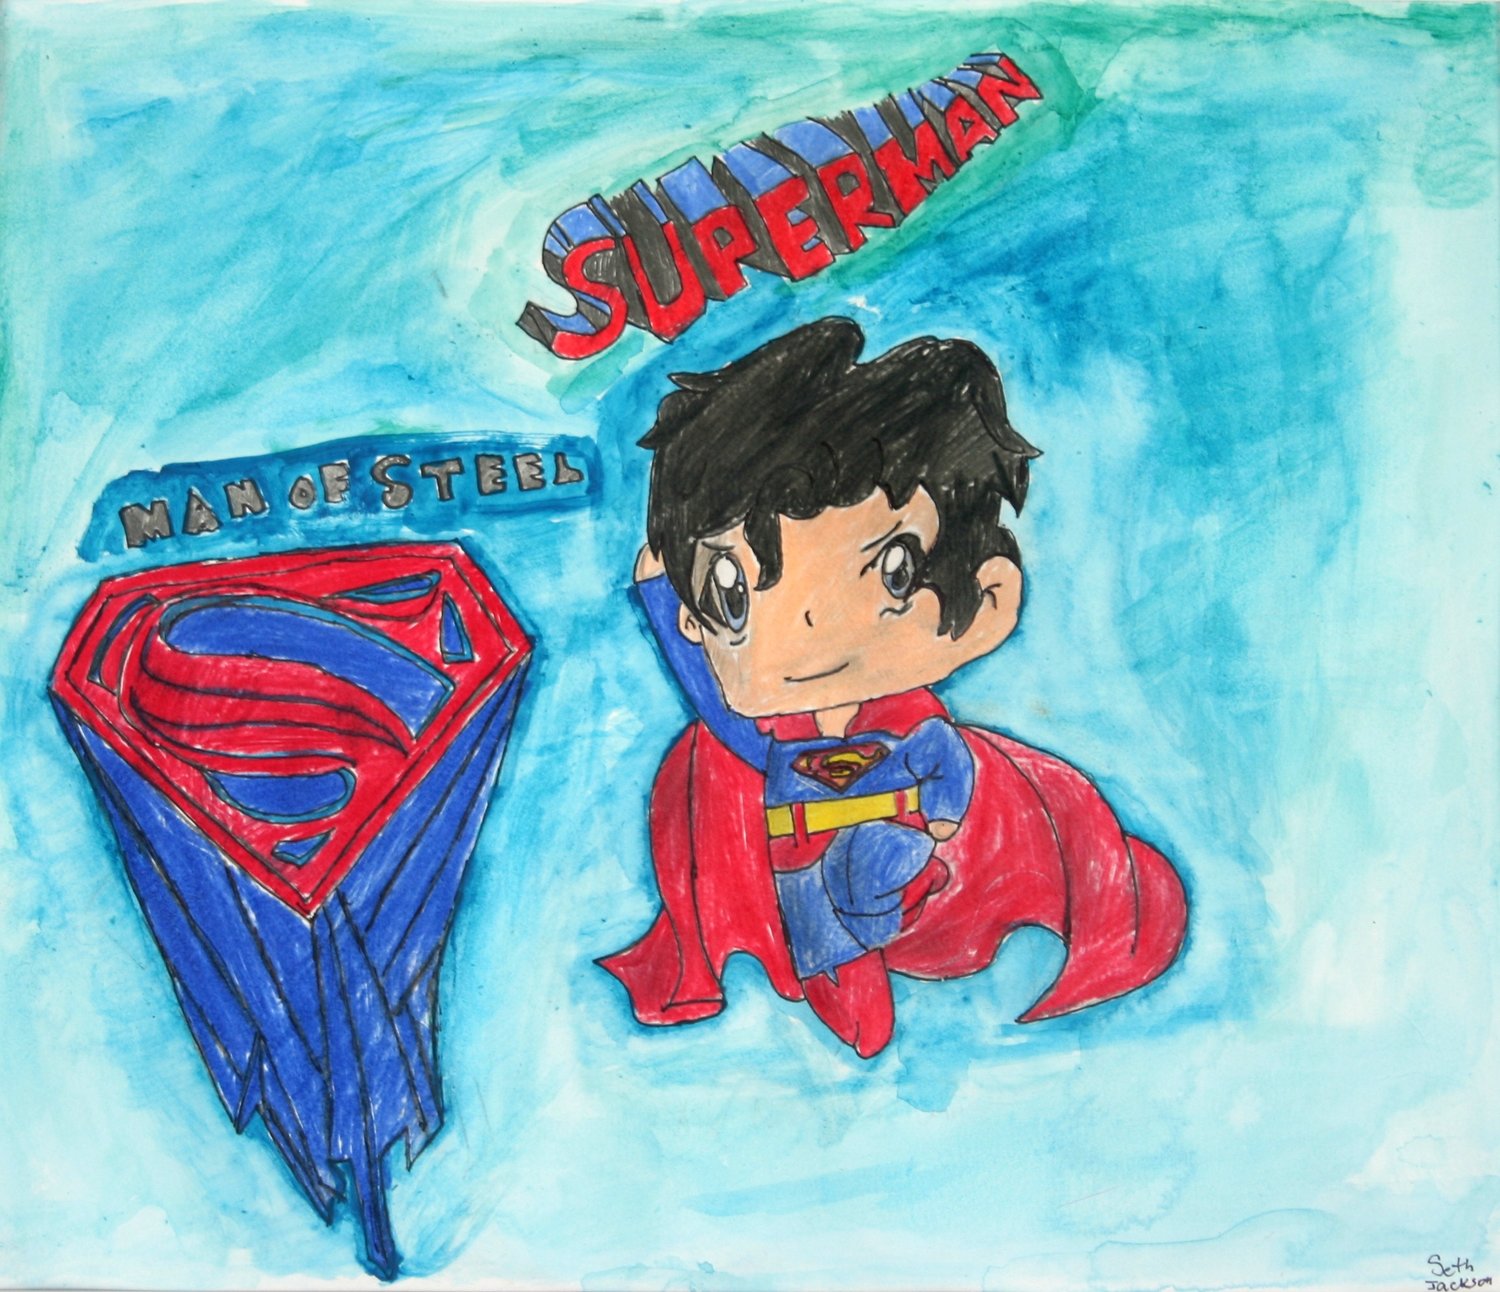 Man of Steel: Superman